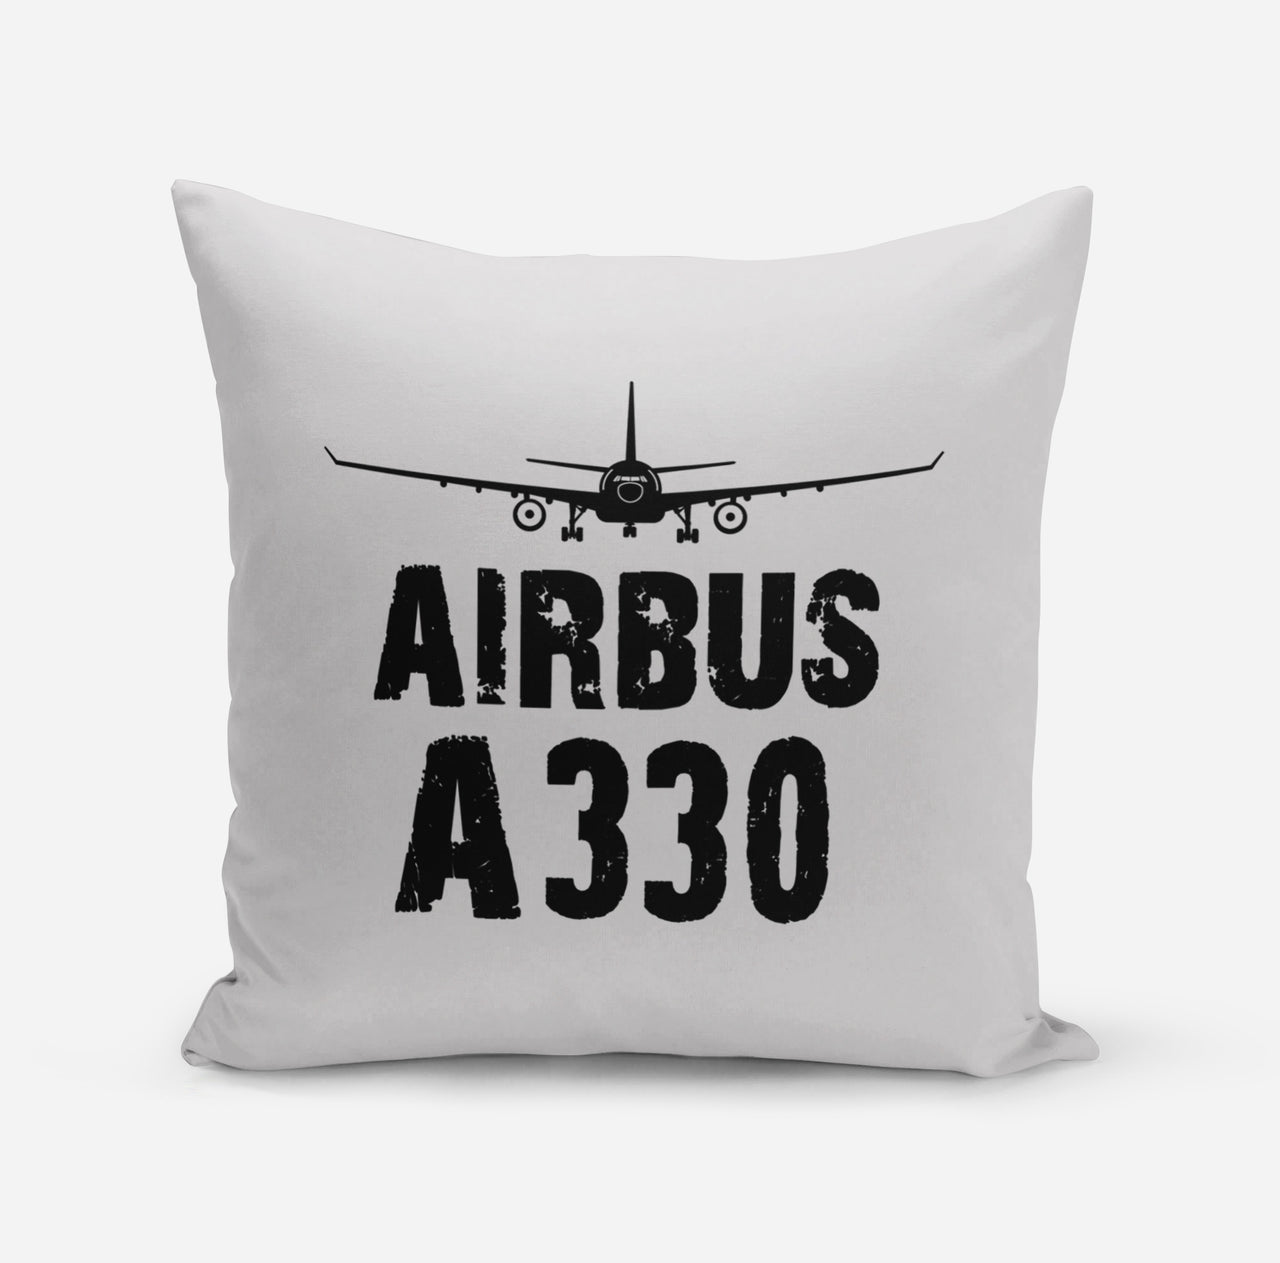 Airbus A330 & Plane Designed Pillows